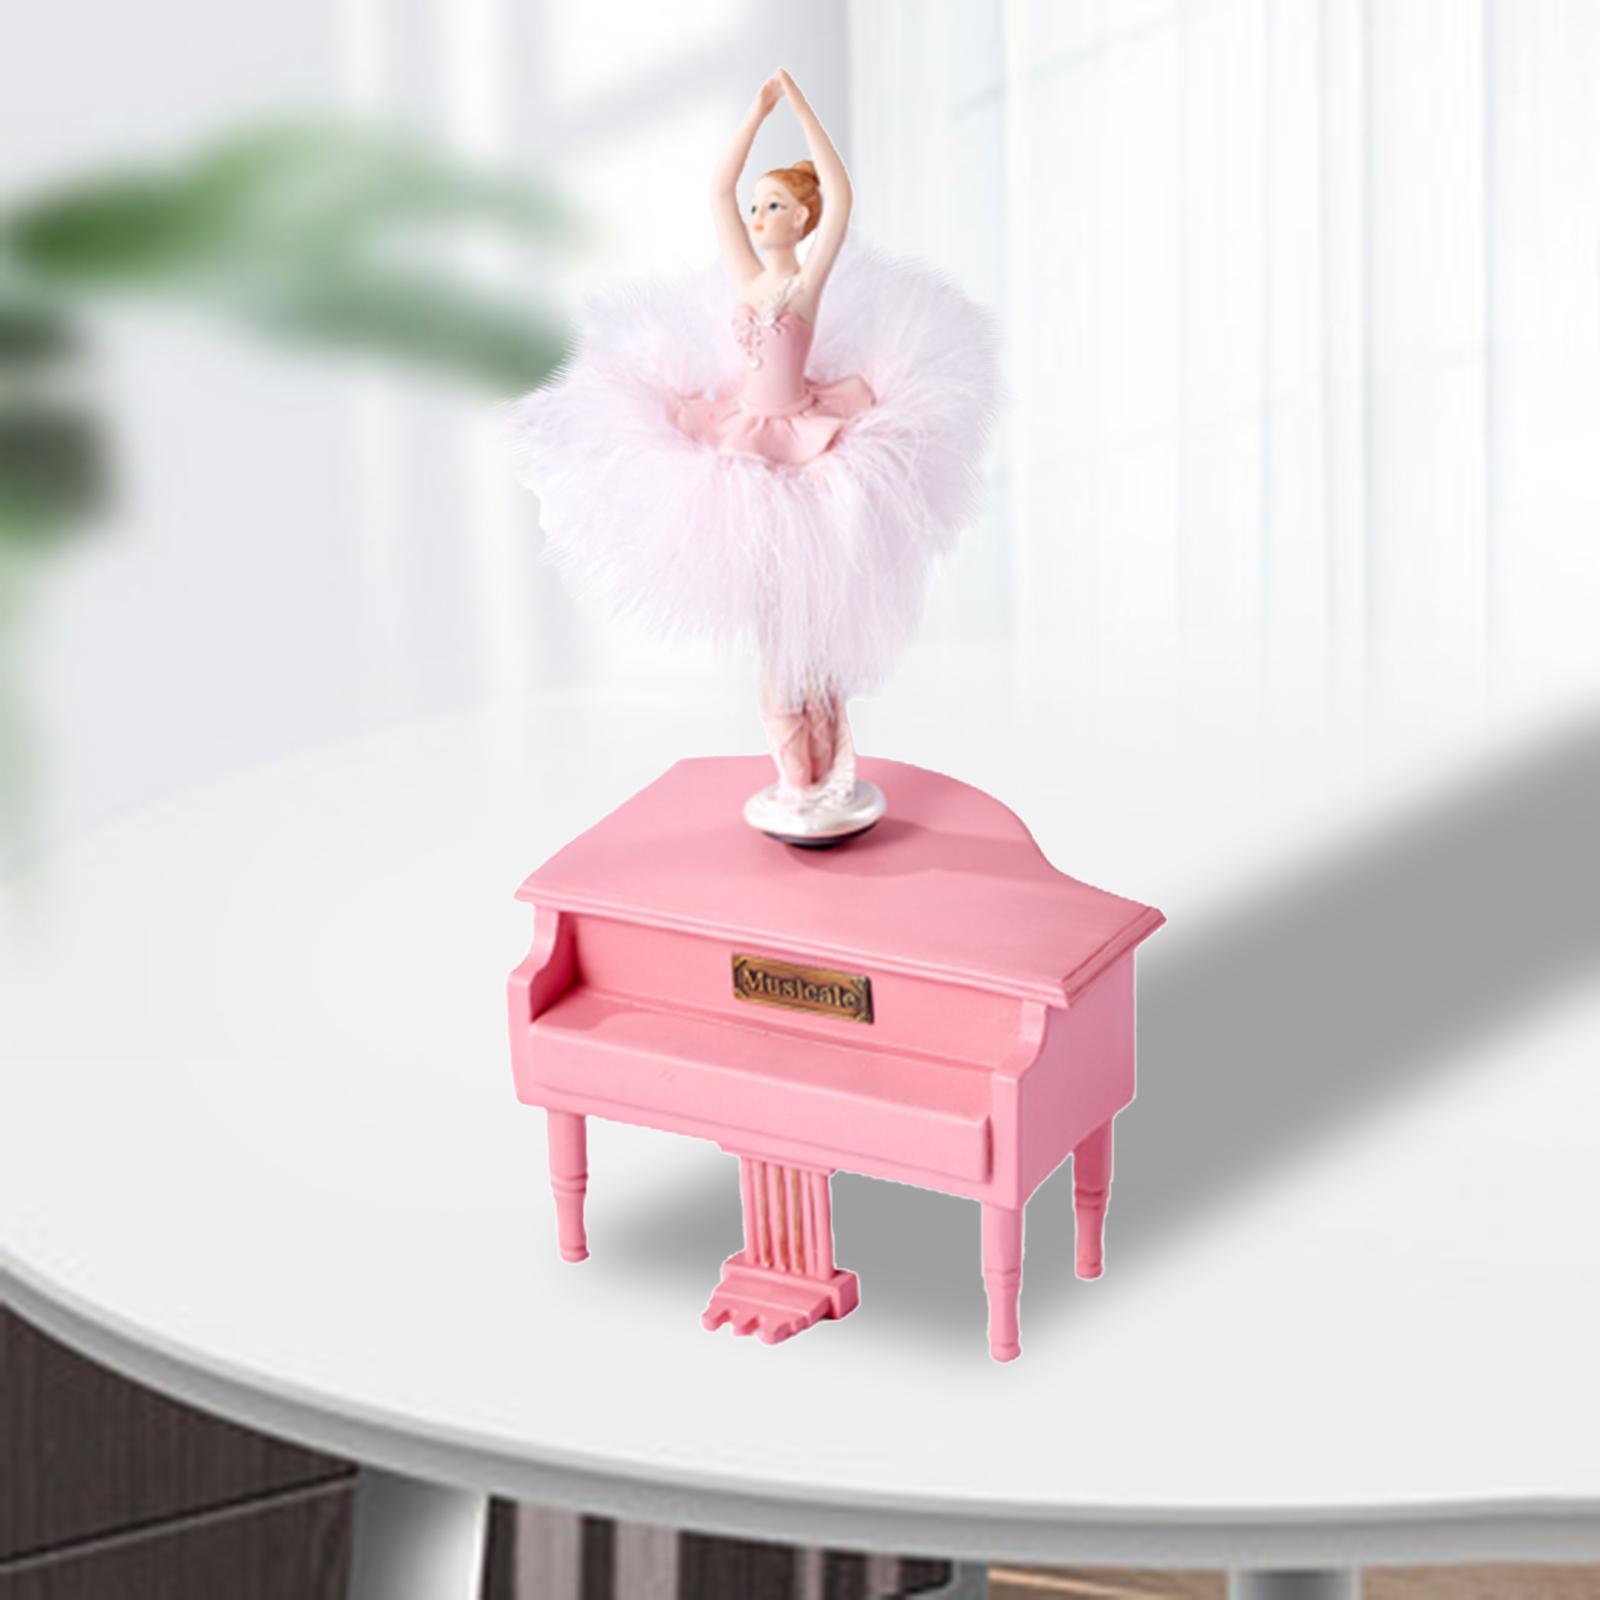 Resin Ballerina Music Box Dancing Girl Figurine Desktop Ornament